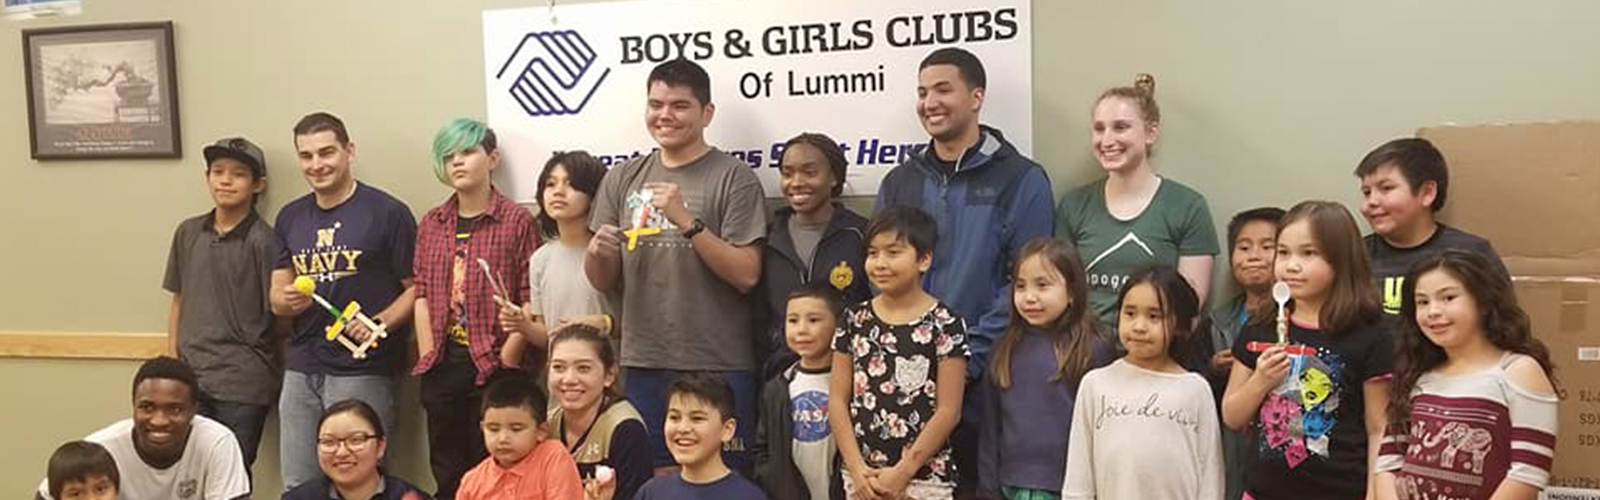 Lummi Boys & Girls Club